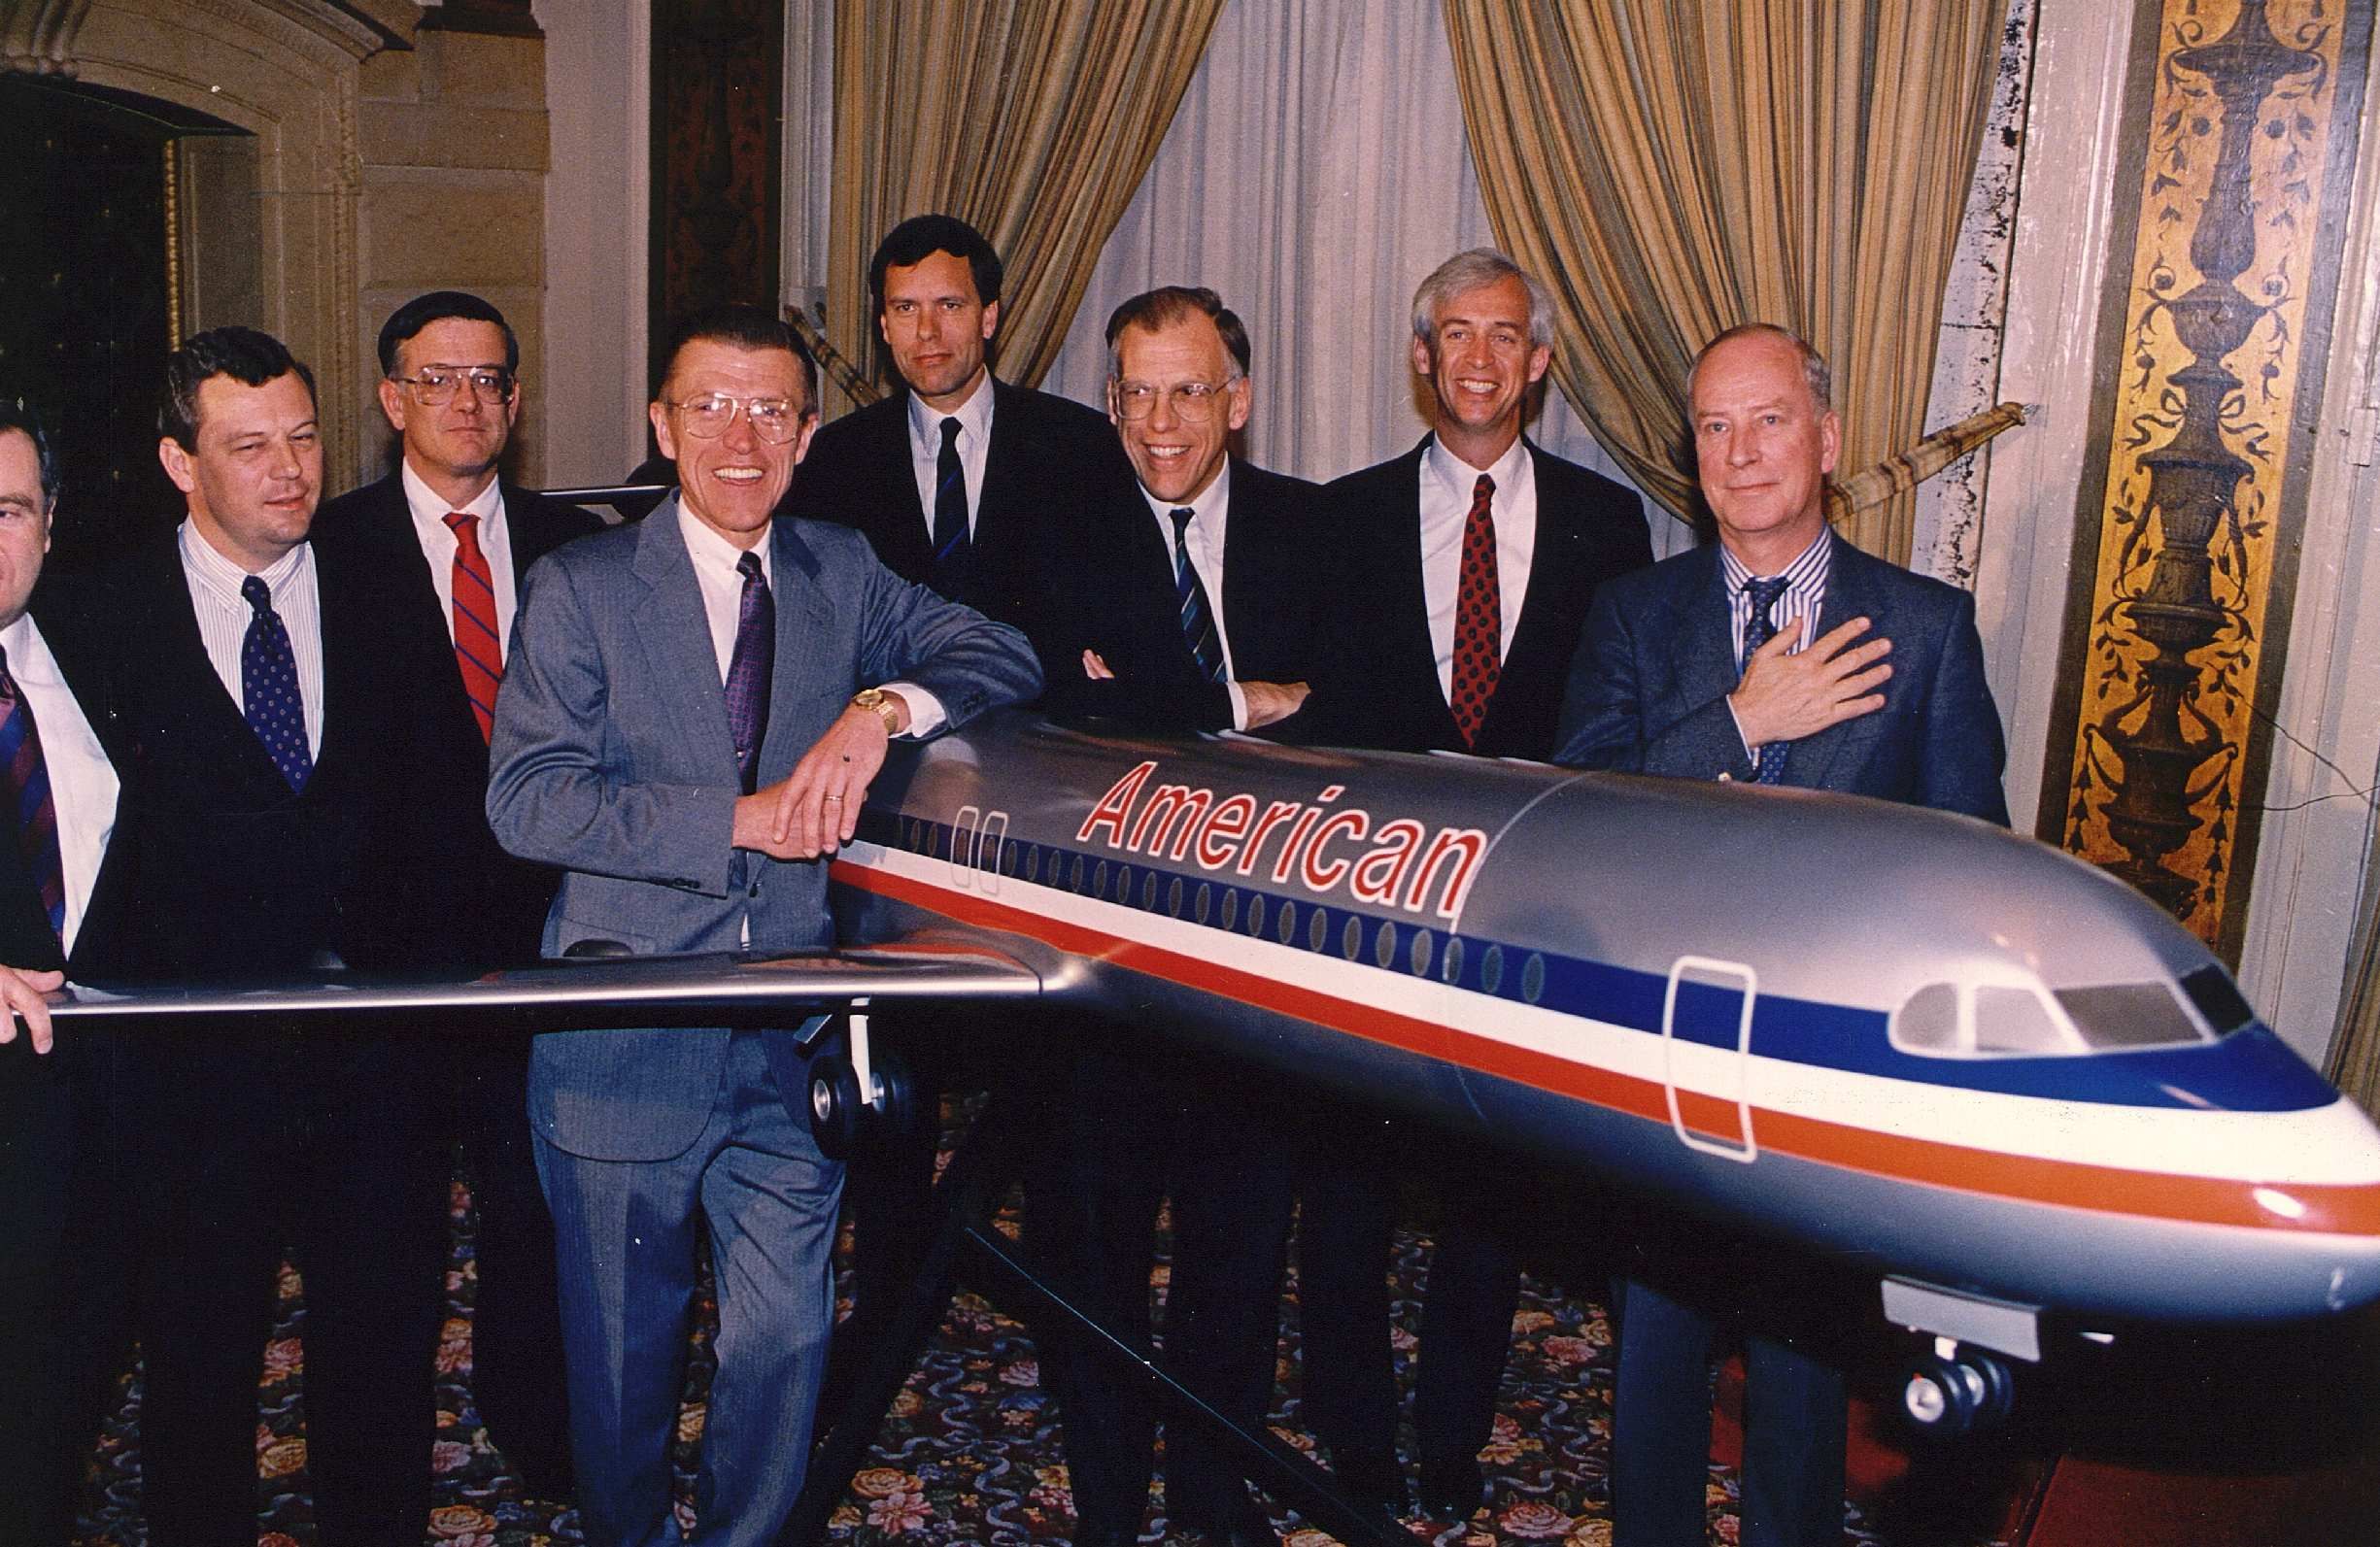 1989 American Airlines heeft bekend gemaakt 150 Fokker-100 toestellen te willen aanschaffen. Foto: v.l.n.r. S. Matthews (Fokker VS), C. Biersma (Fokker), R. Baker (AA), Robert L. Crandall (President AA), E.J. Nederkoorn(Fokker), R. Van Duinen (Fokker), D. Carty (AA) en F.Swartouw.